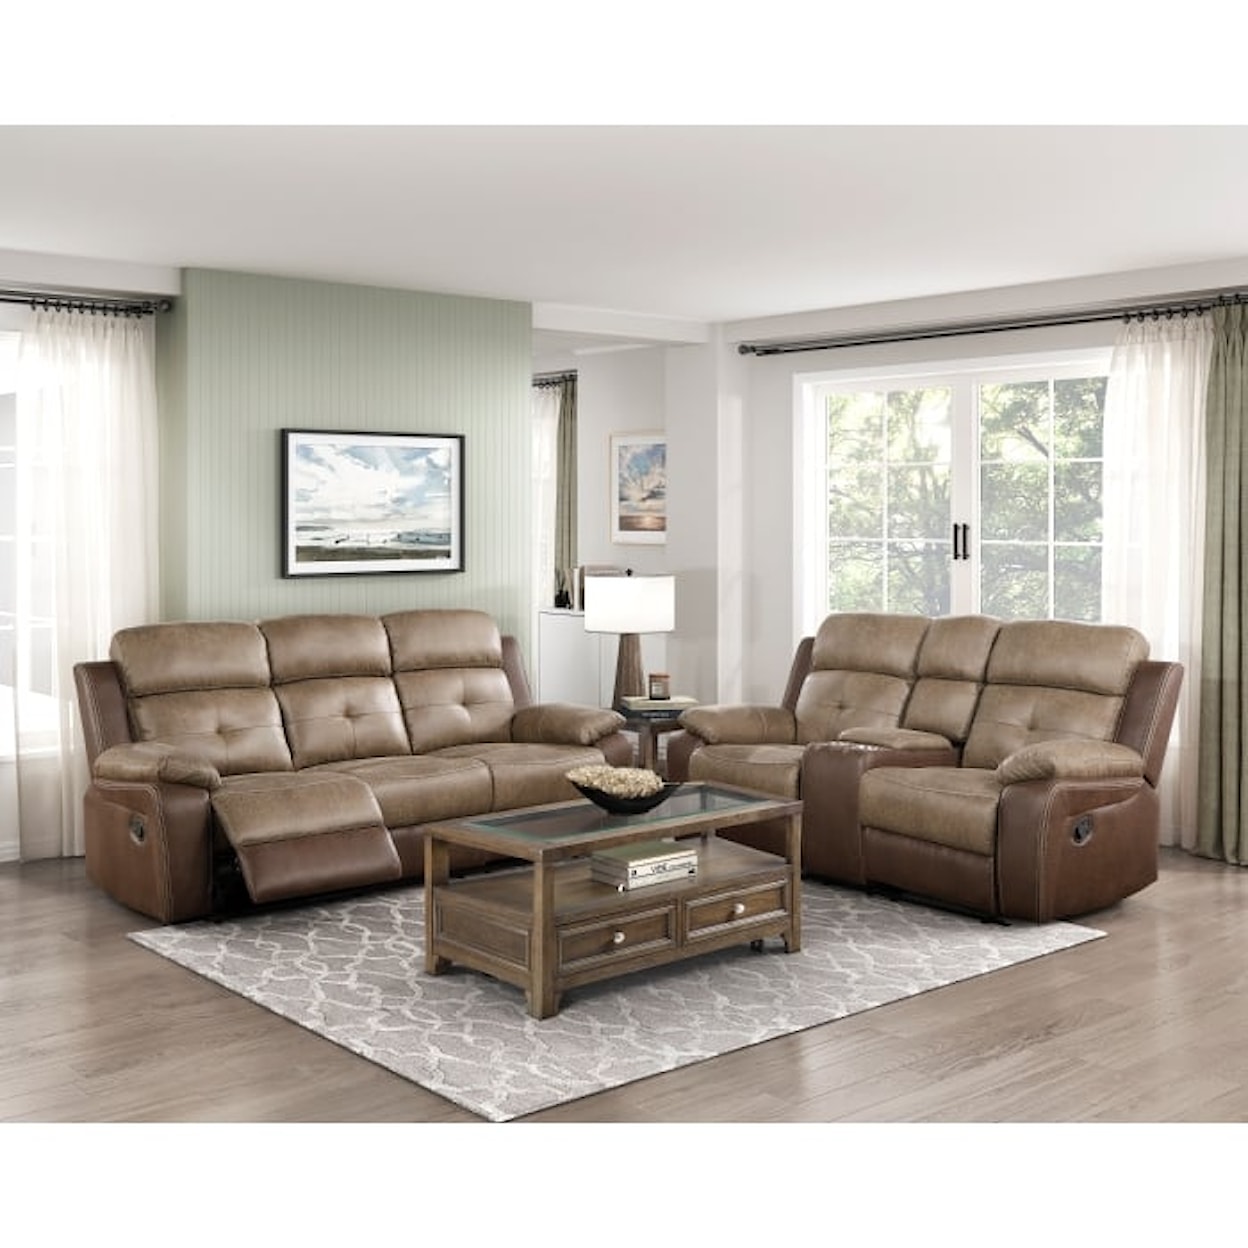 Homelegance Furniture Glendale Double Reclining Sofa